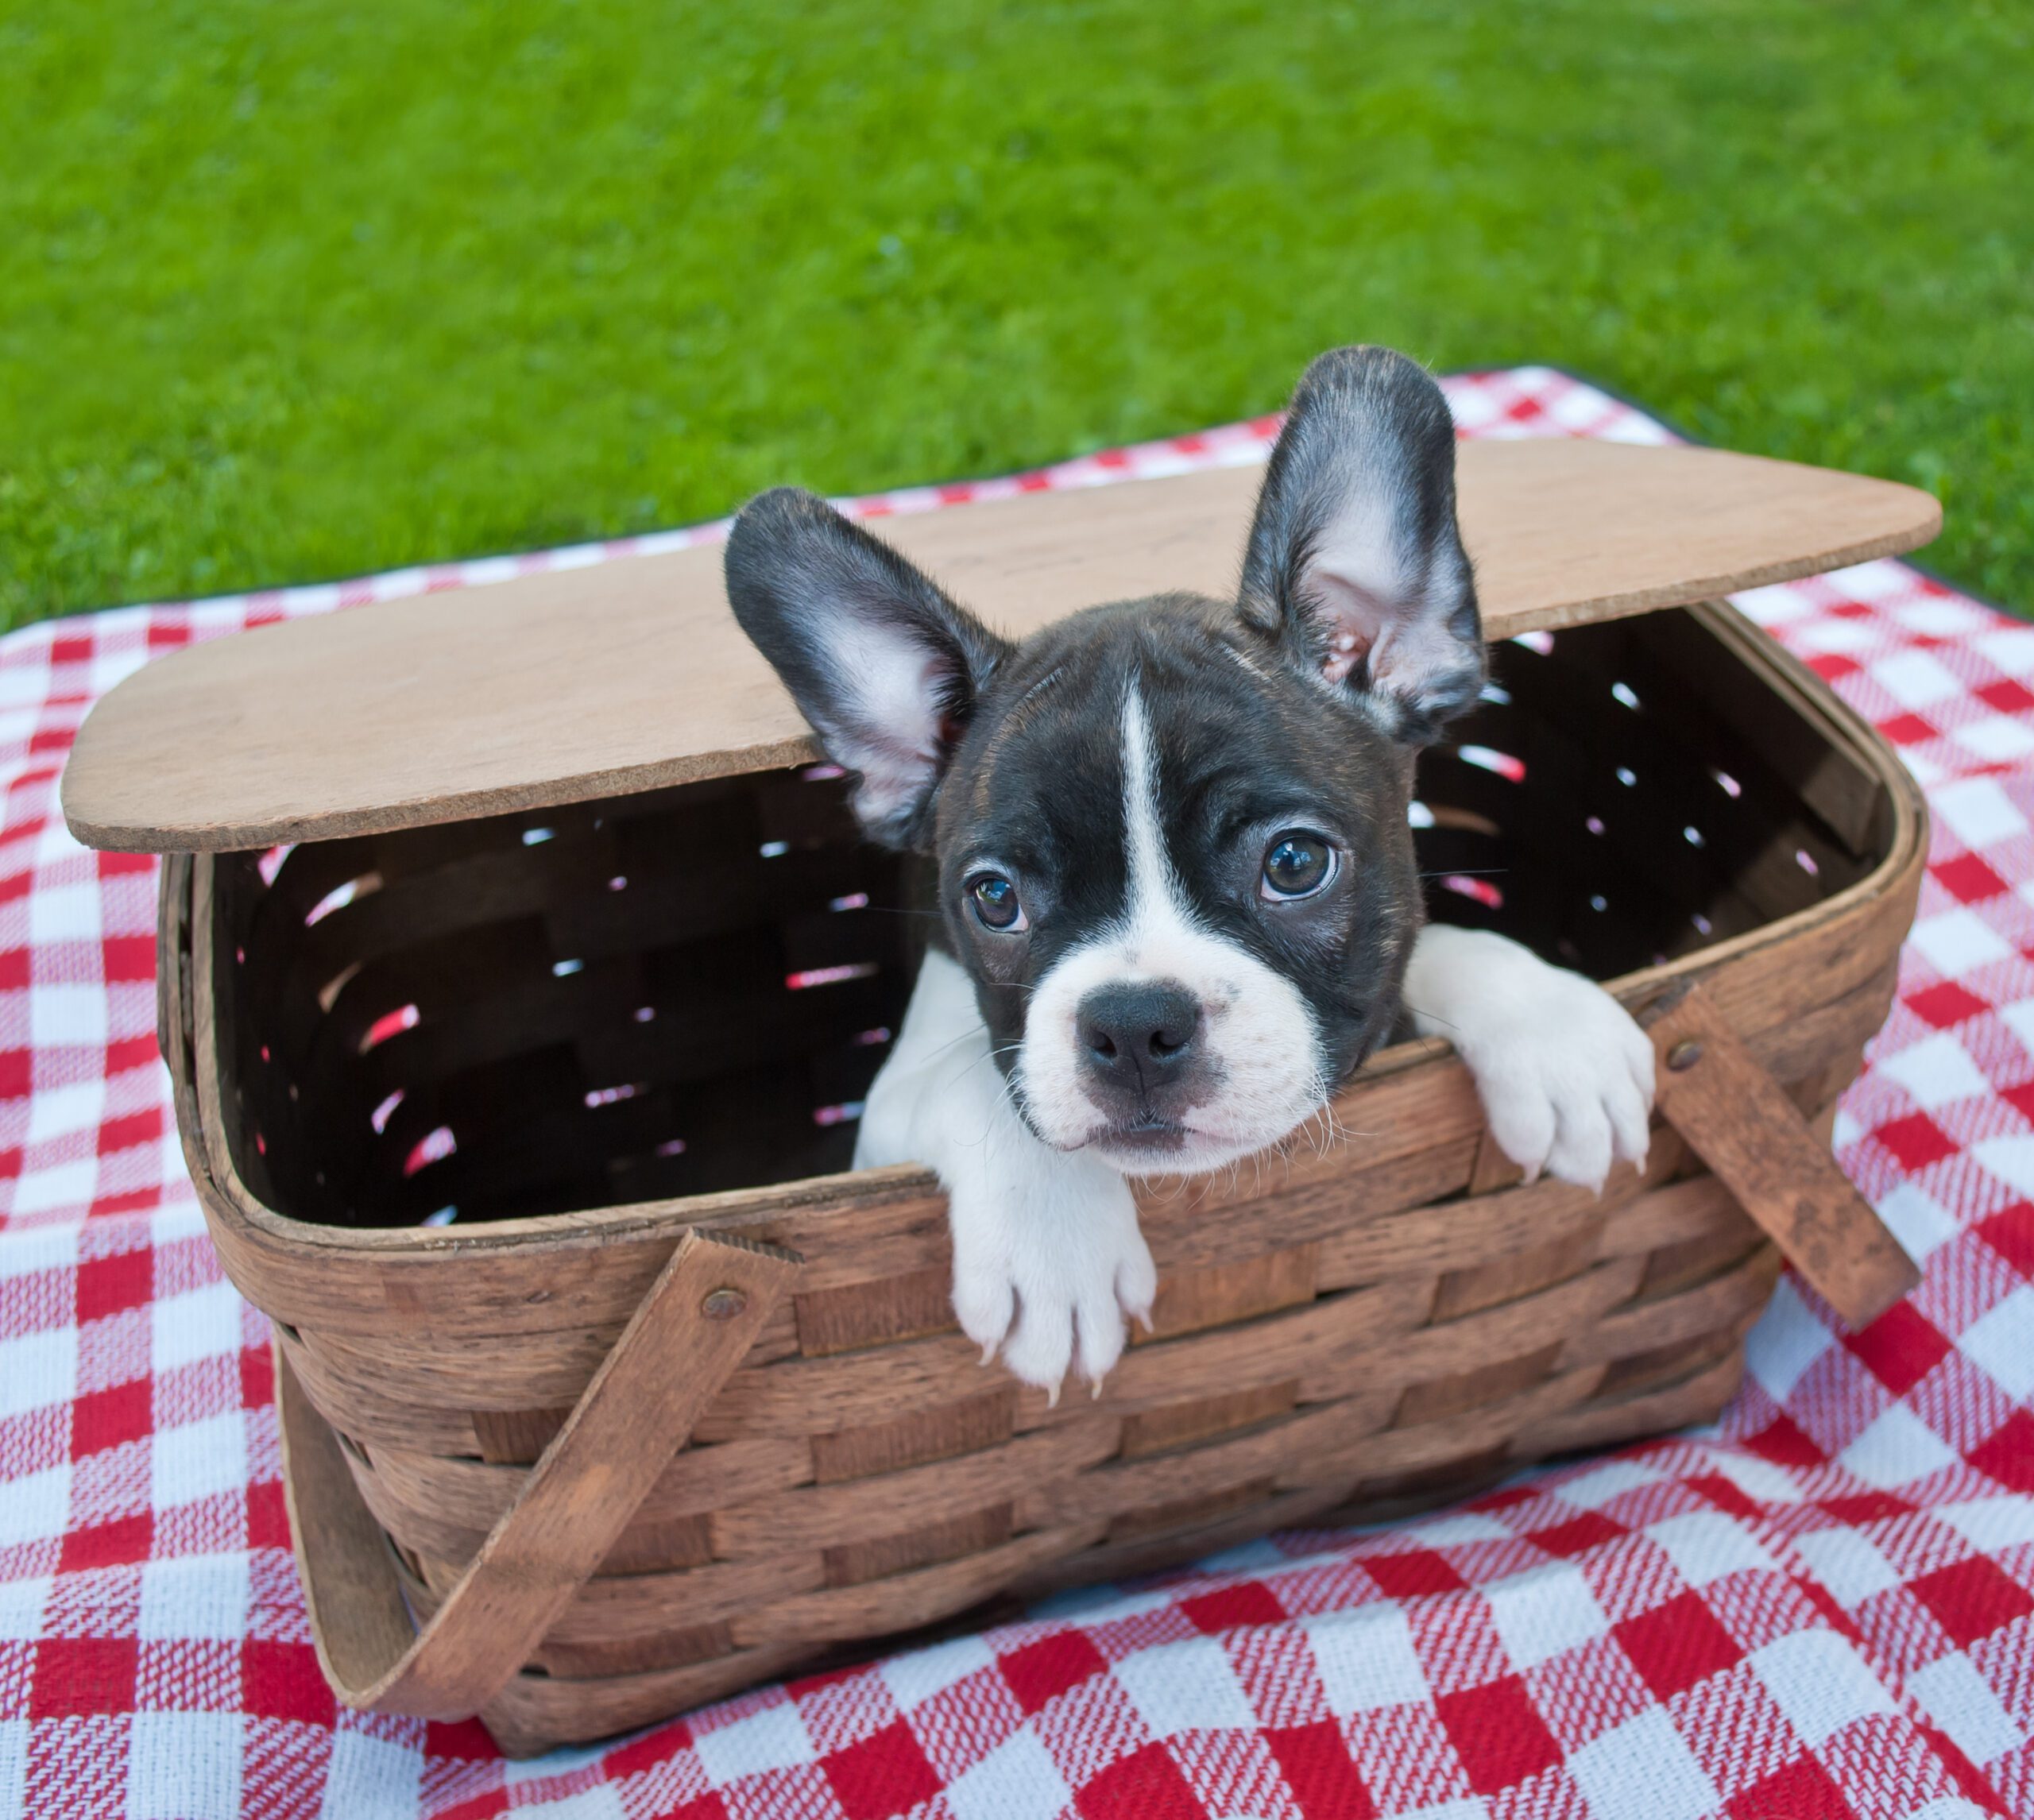 Cute French Bulldog peeking his cute little head out of a picnic basket.